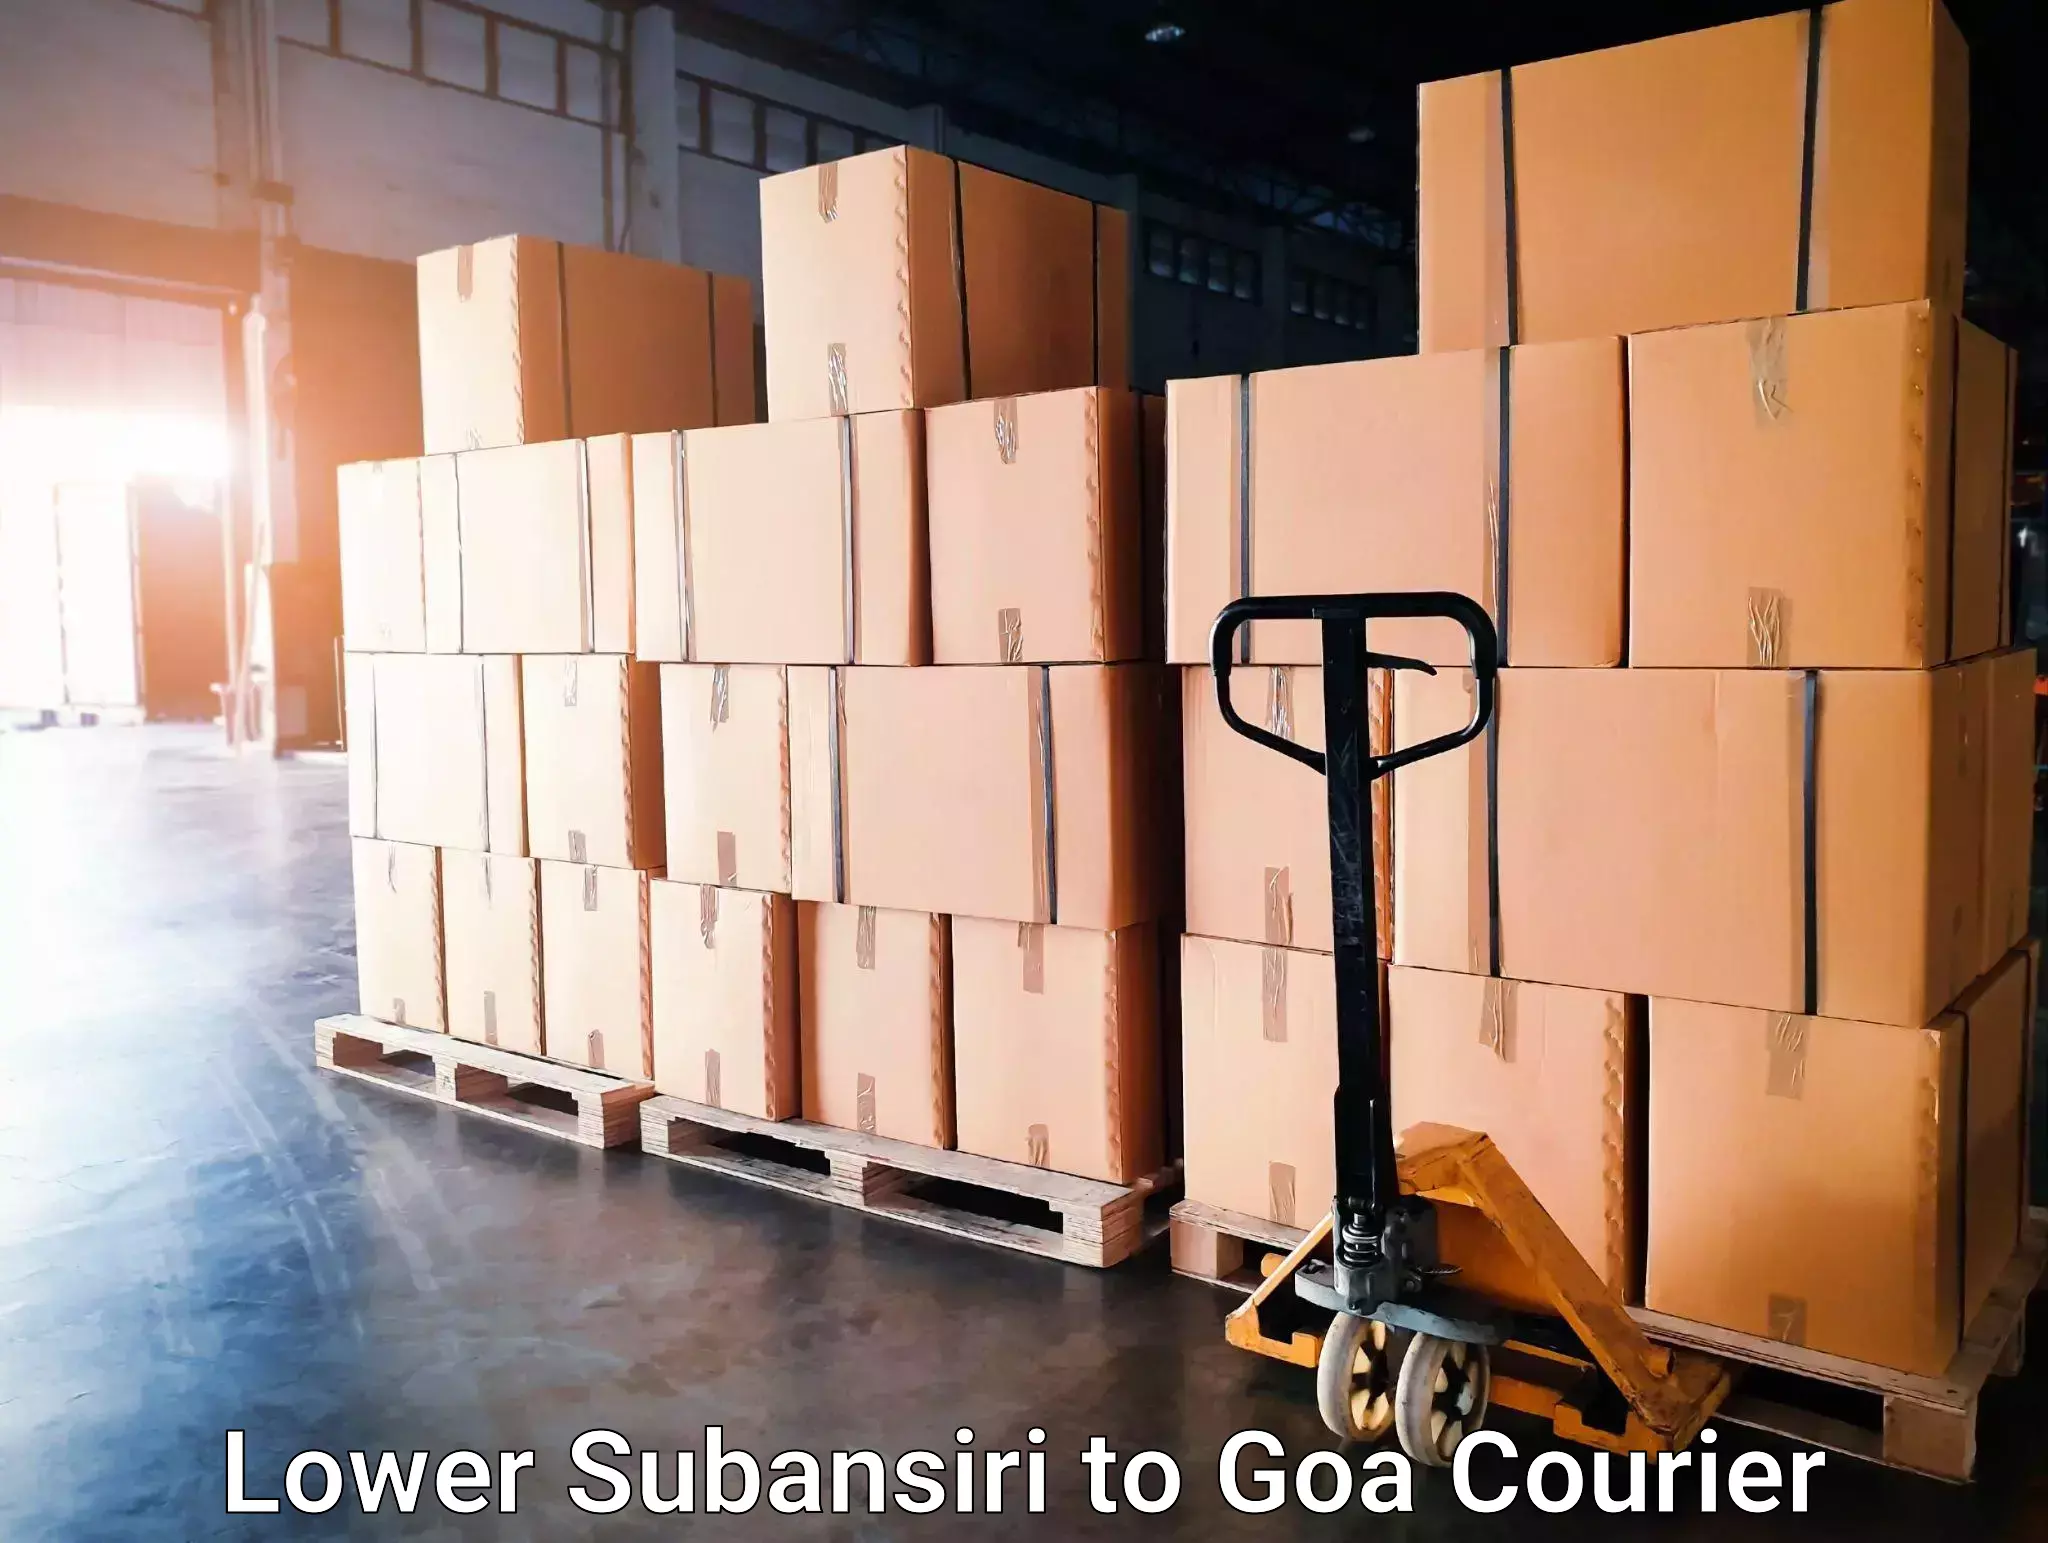 Express postal services Lower Subansiri to South Goa